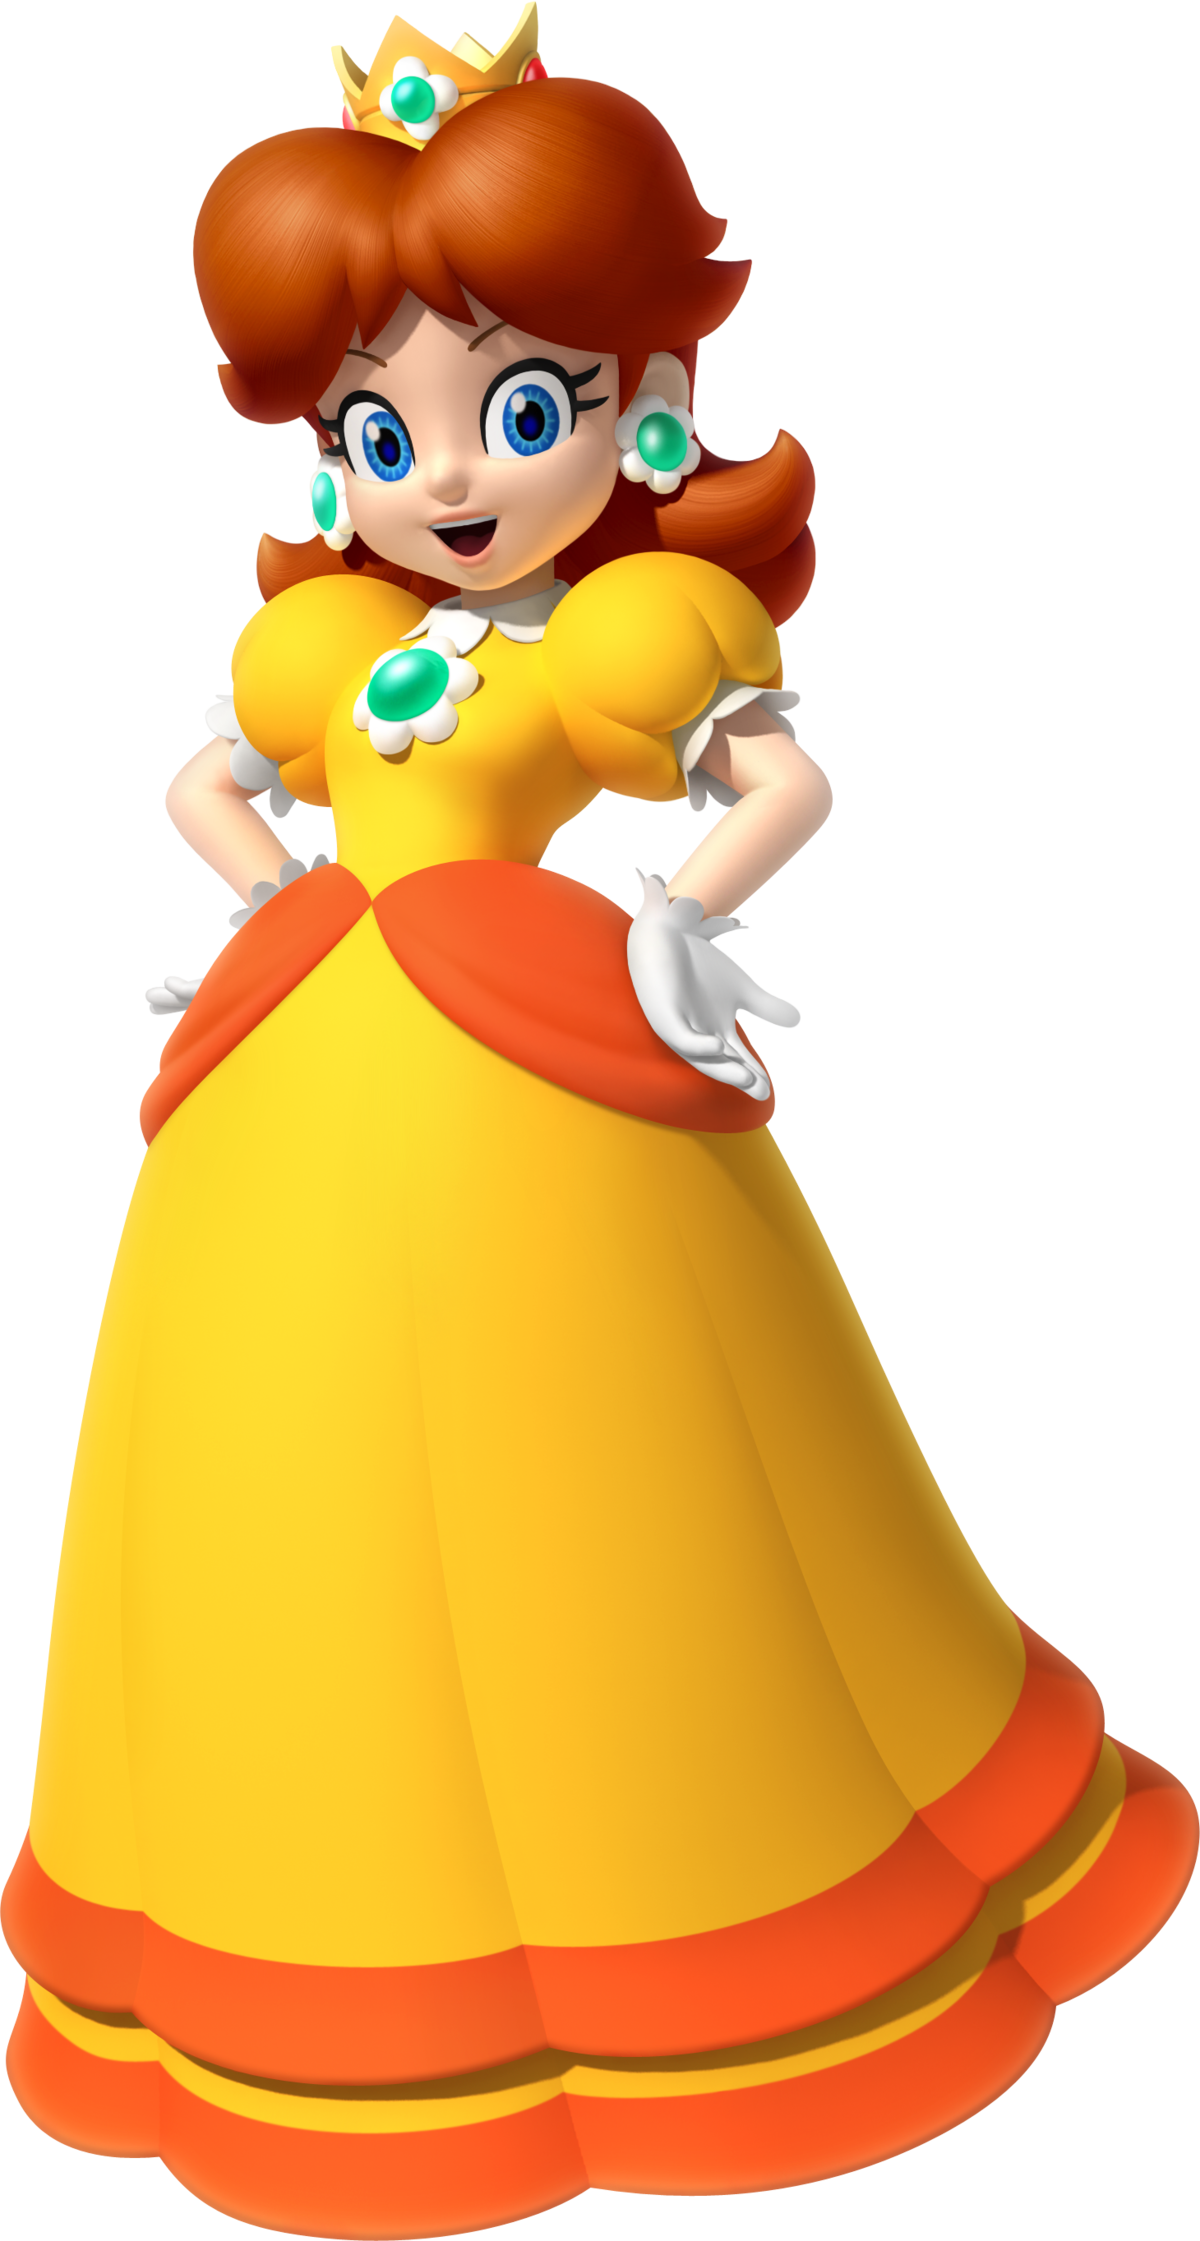 Super Mario Bros. Wonder - Wikipedia